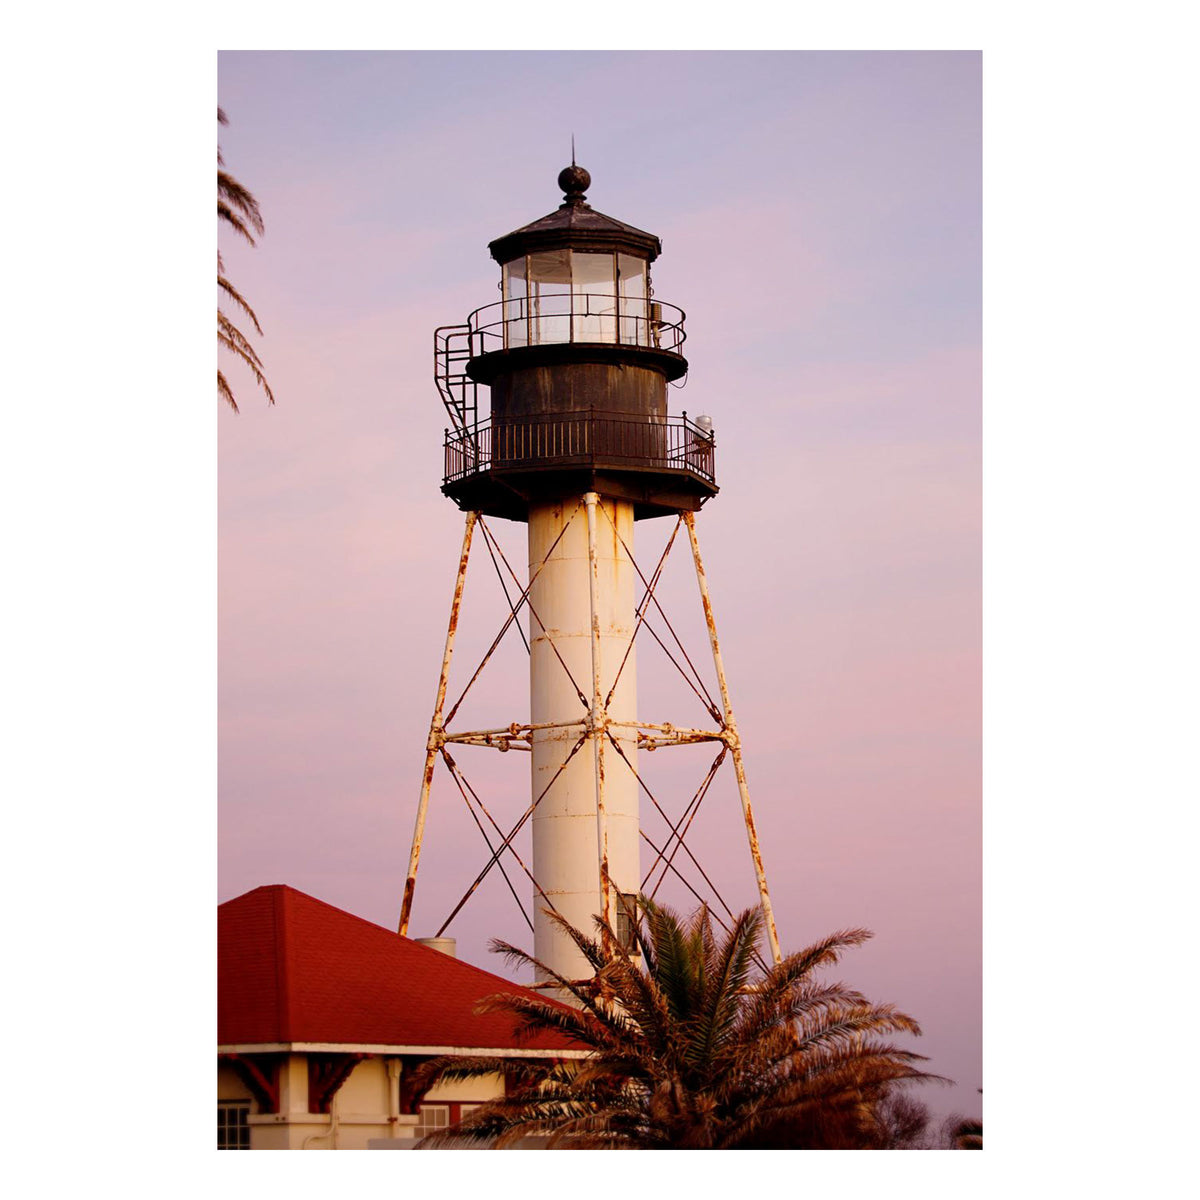 Fine Art Prints - "Lighthouse At Sunset" | Coastal Photography Prints